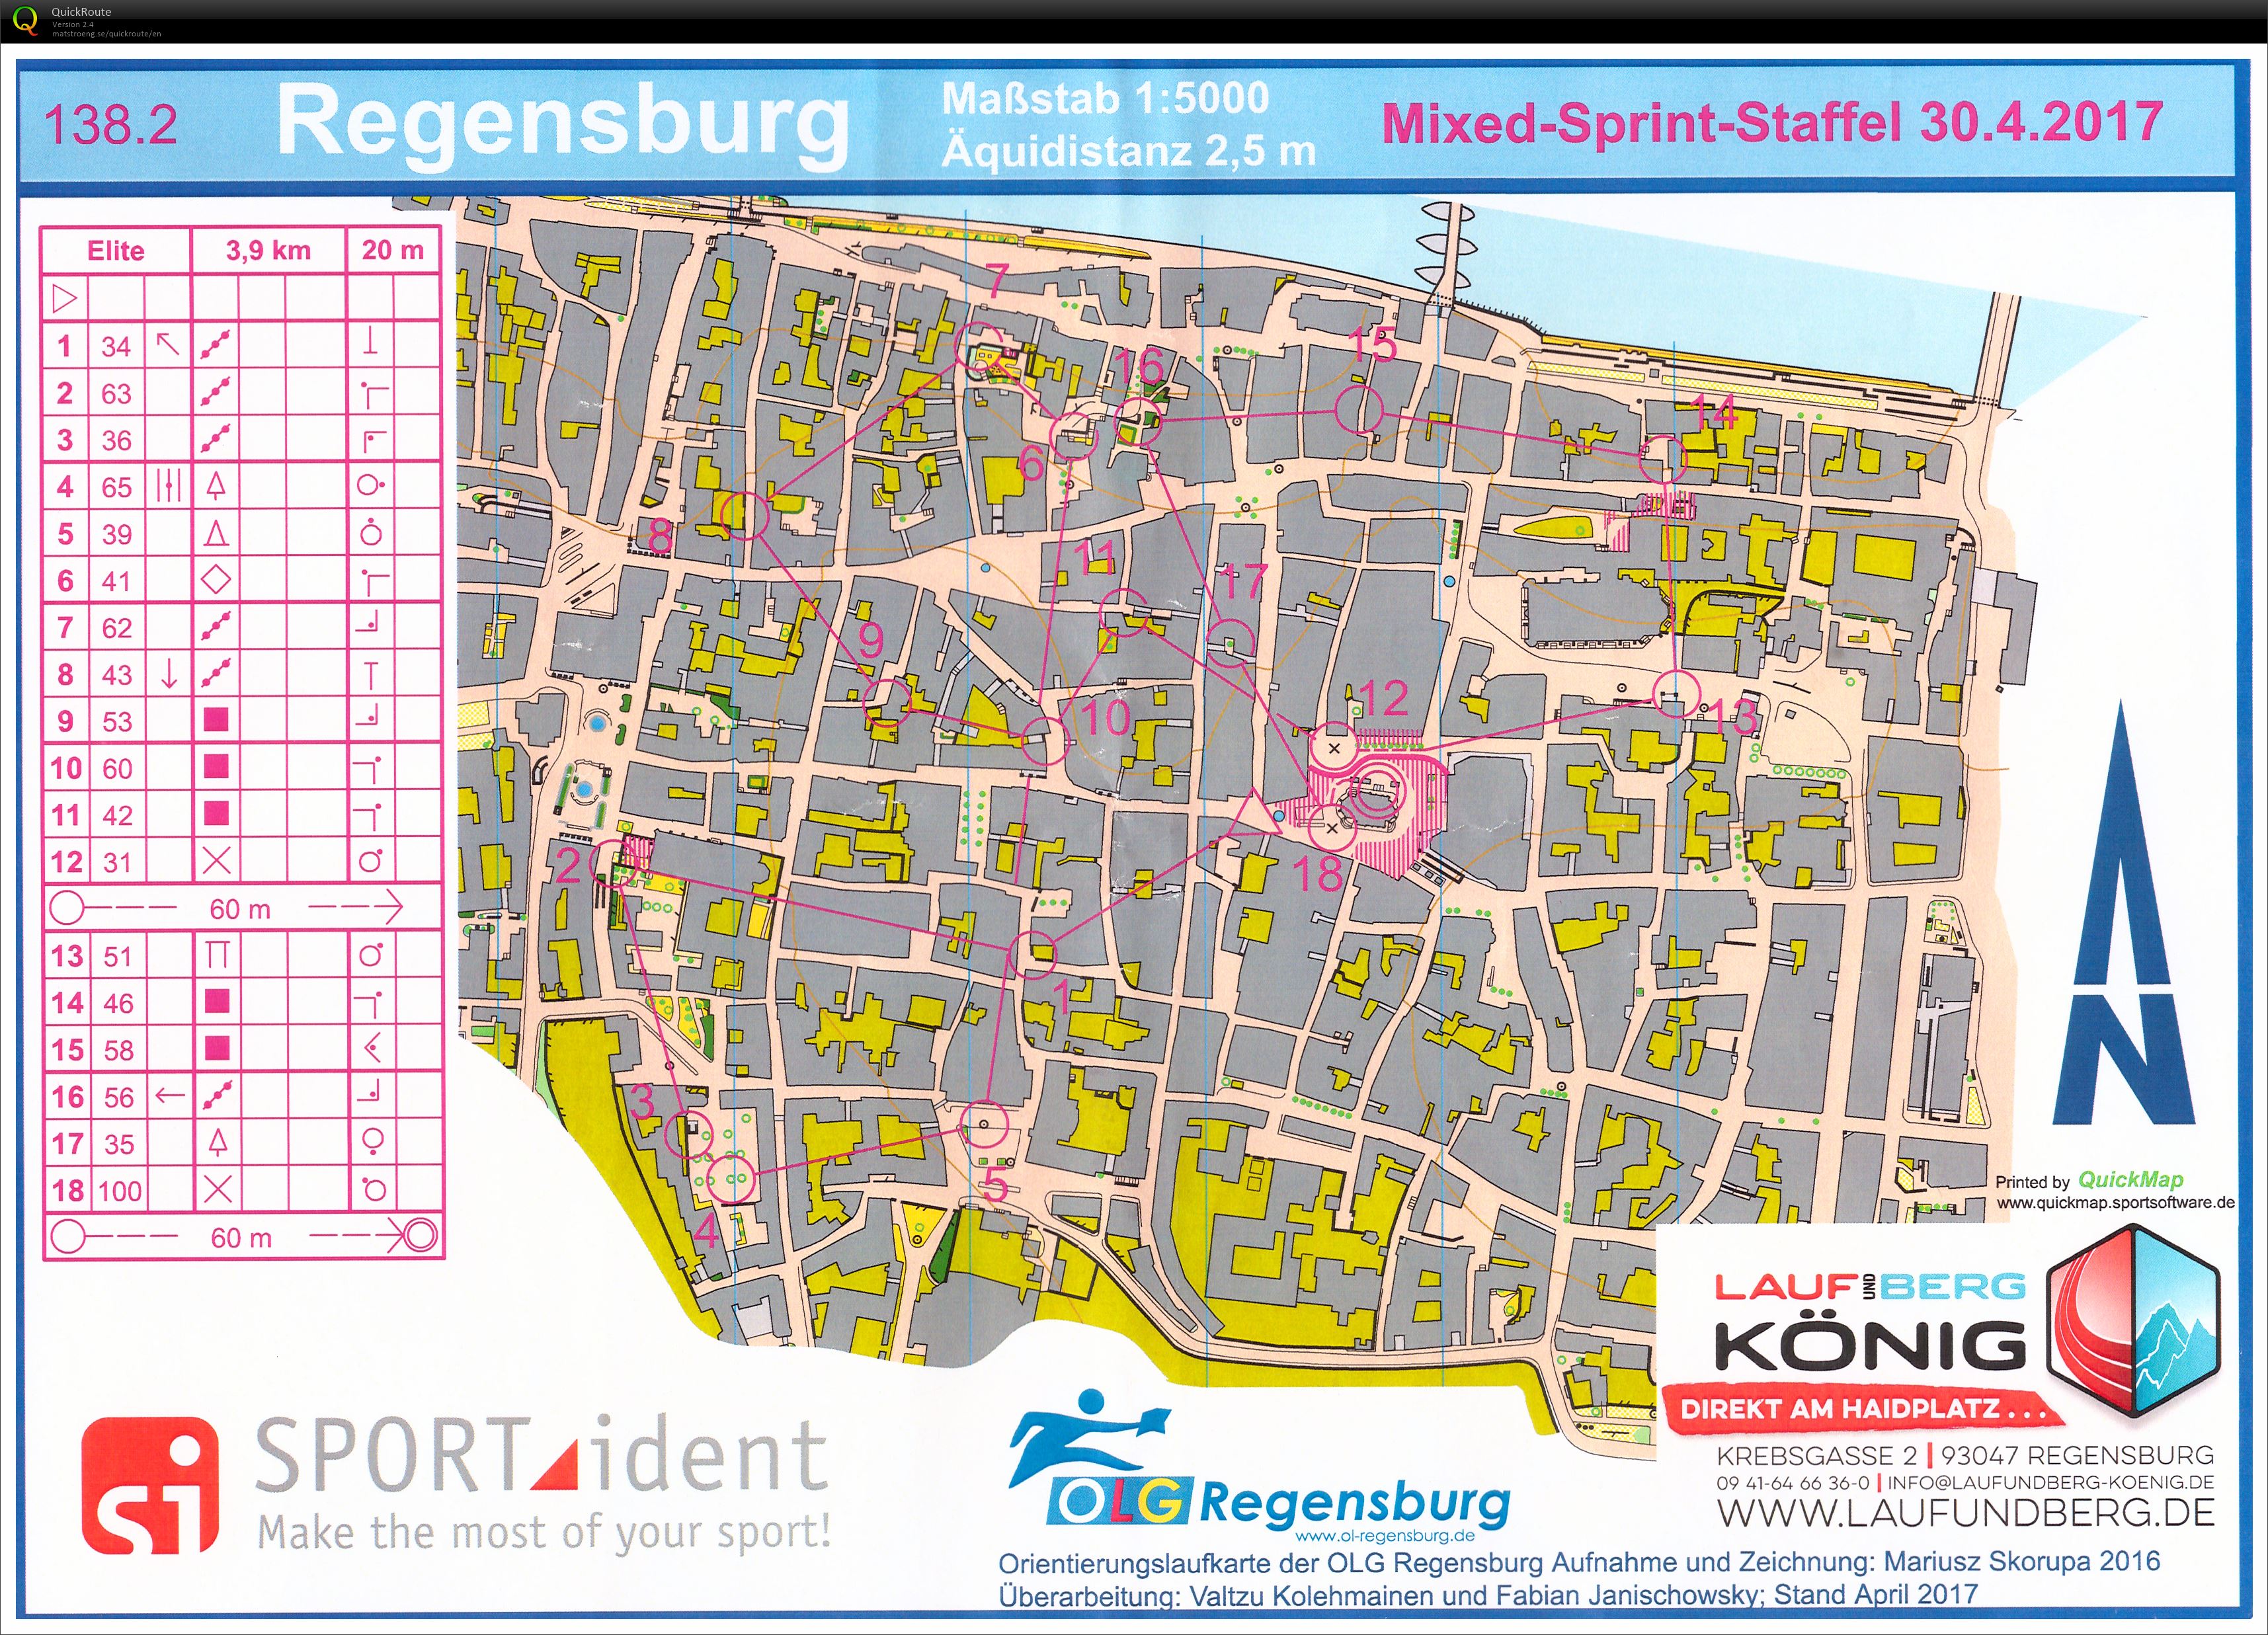 Sprint relay Regensburg (2017-04-30)